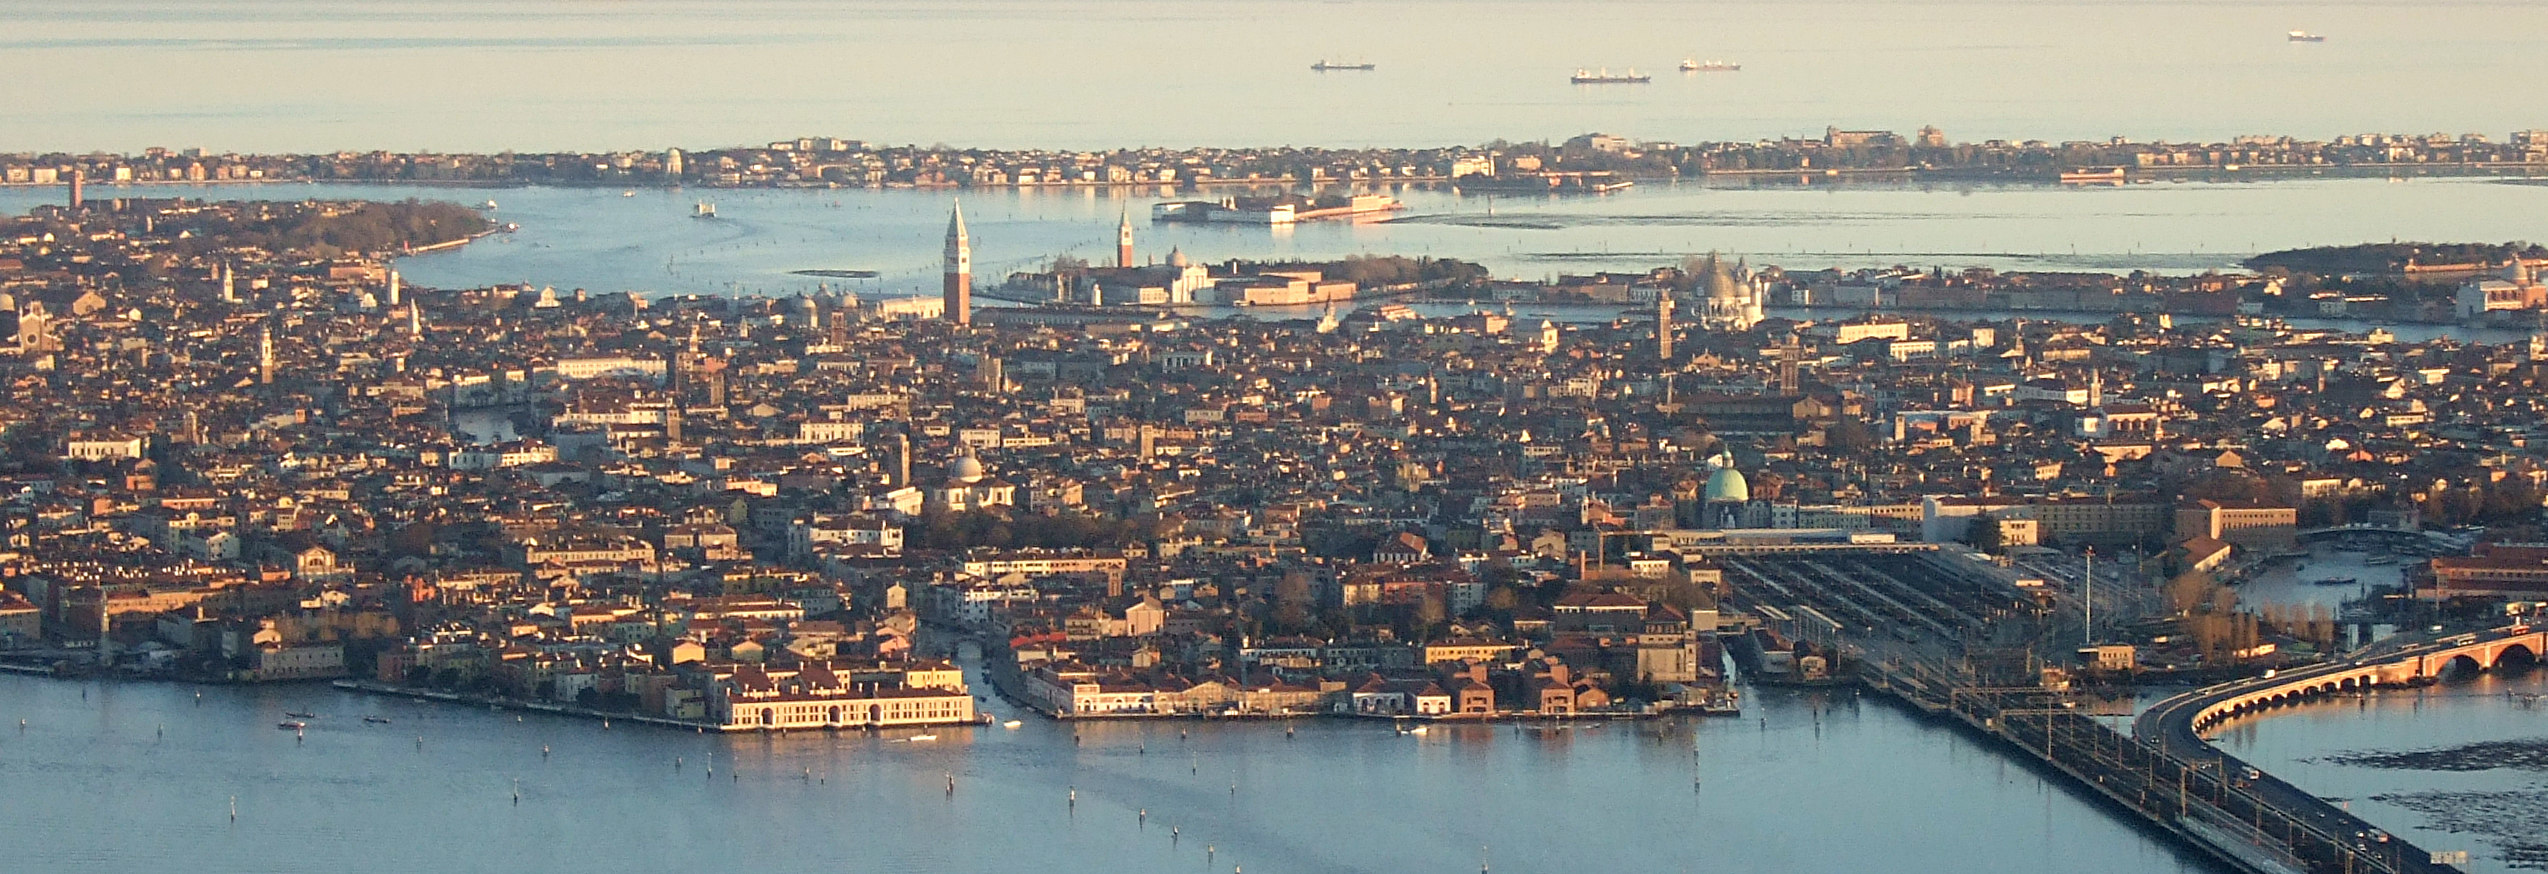 [Imagem: Venezia_Aerial_View.jpg]